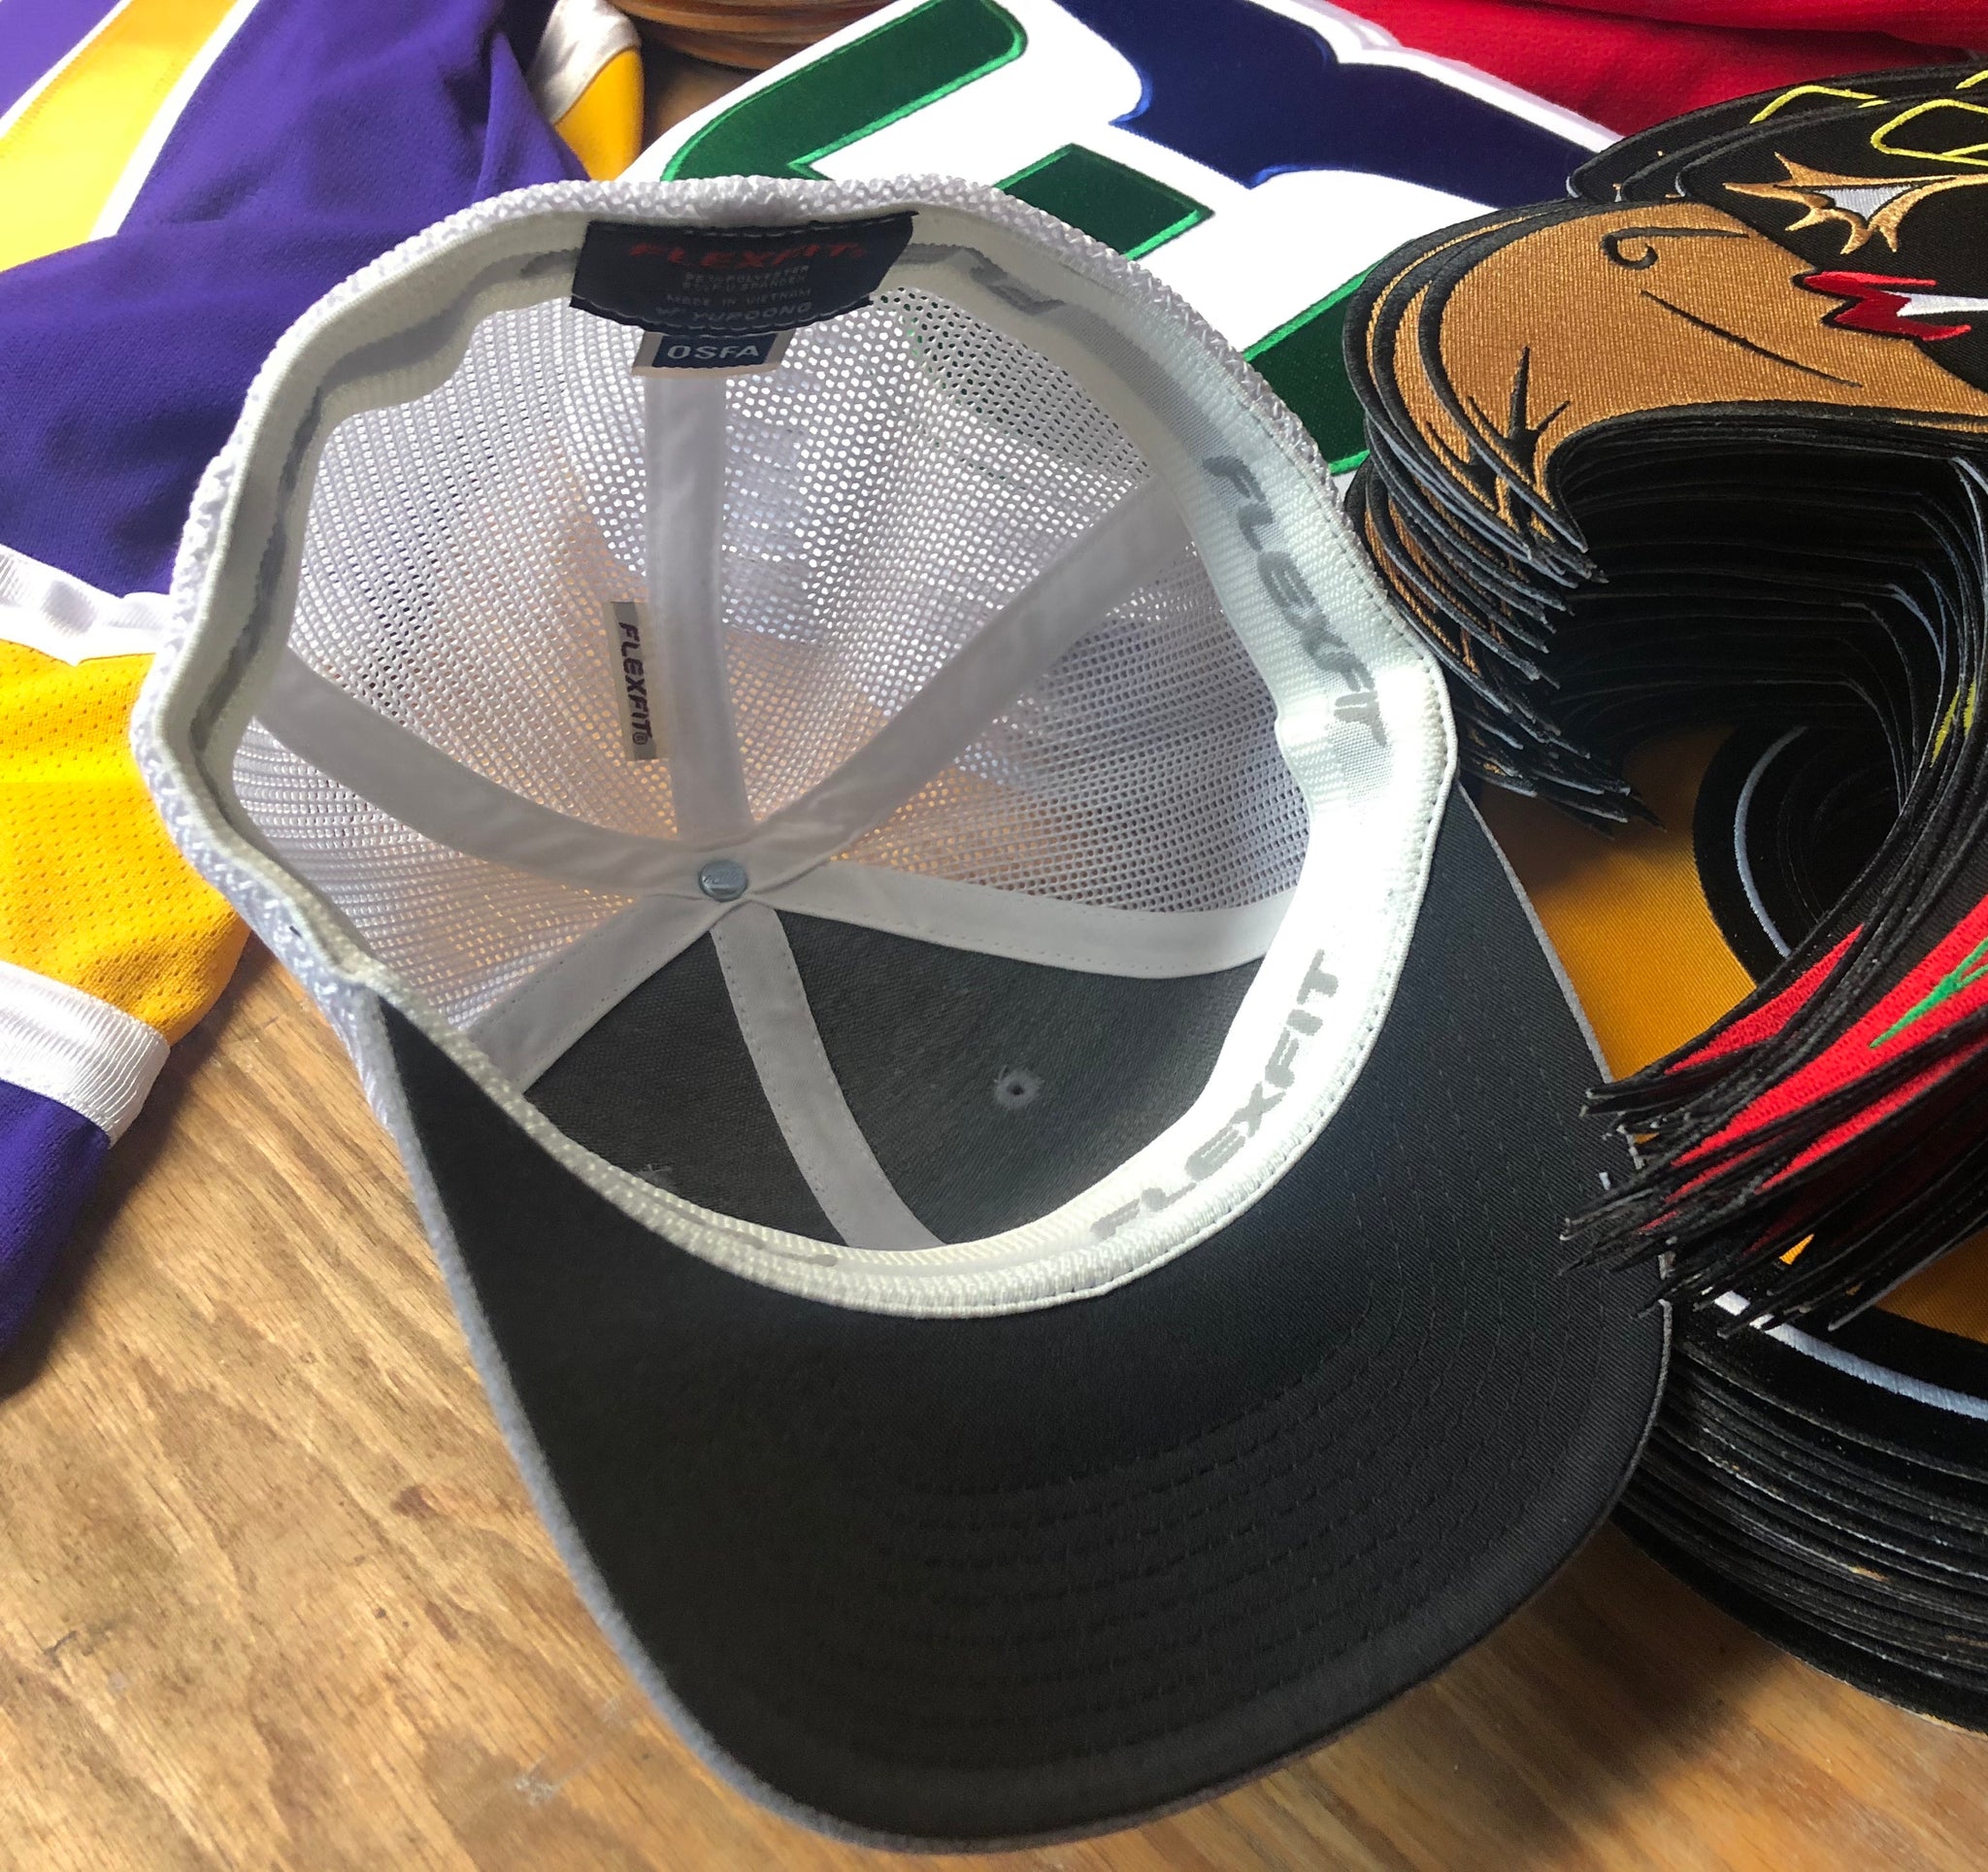 Flex-Fit Hat with a North Stars crest / logo $39 (Grey / White) – Tally  Hockey Jerseys